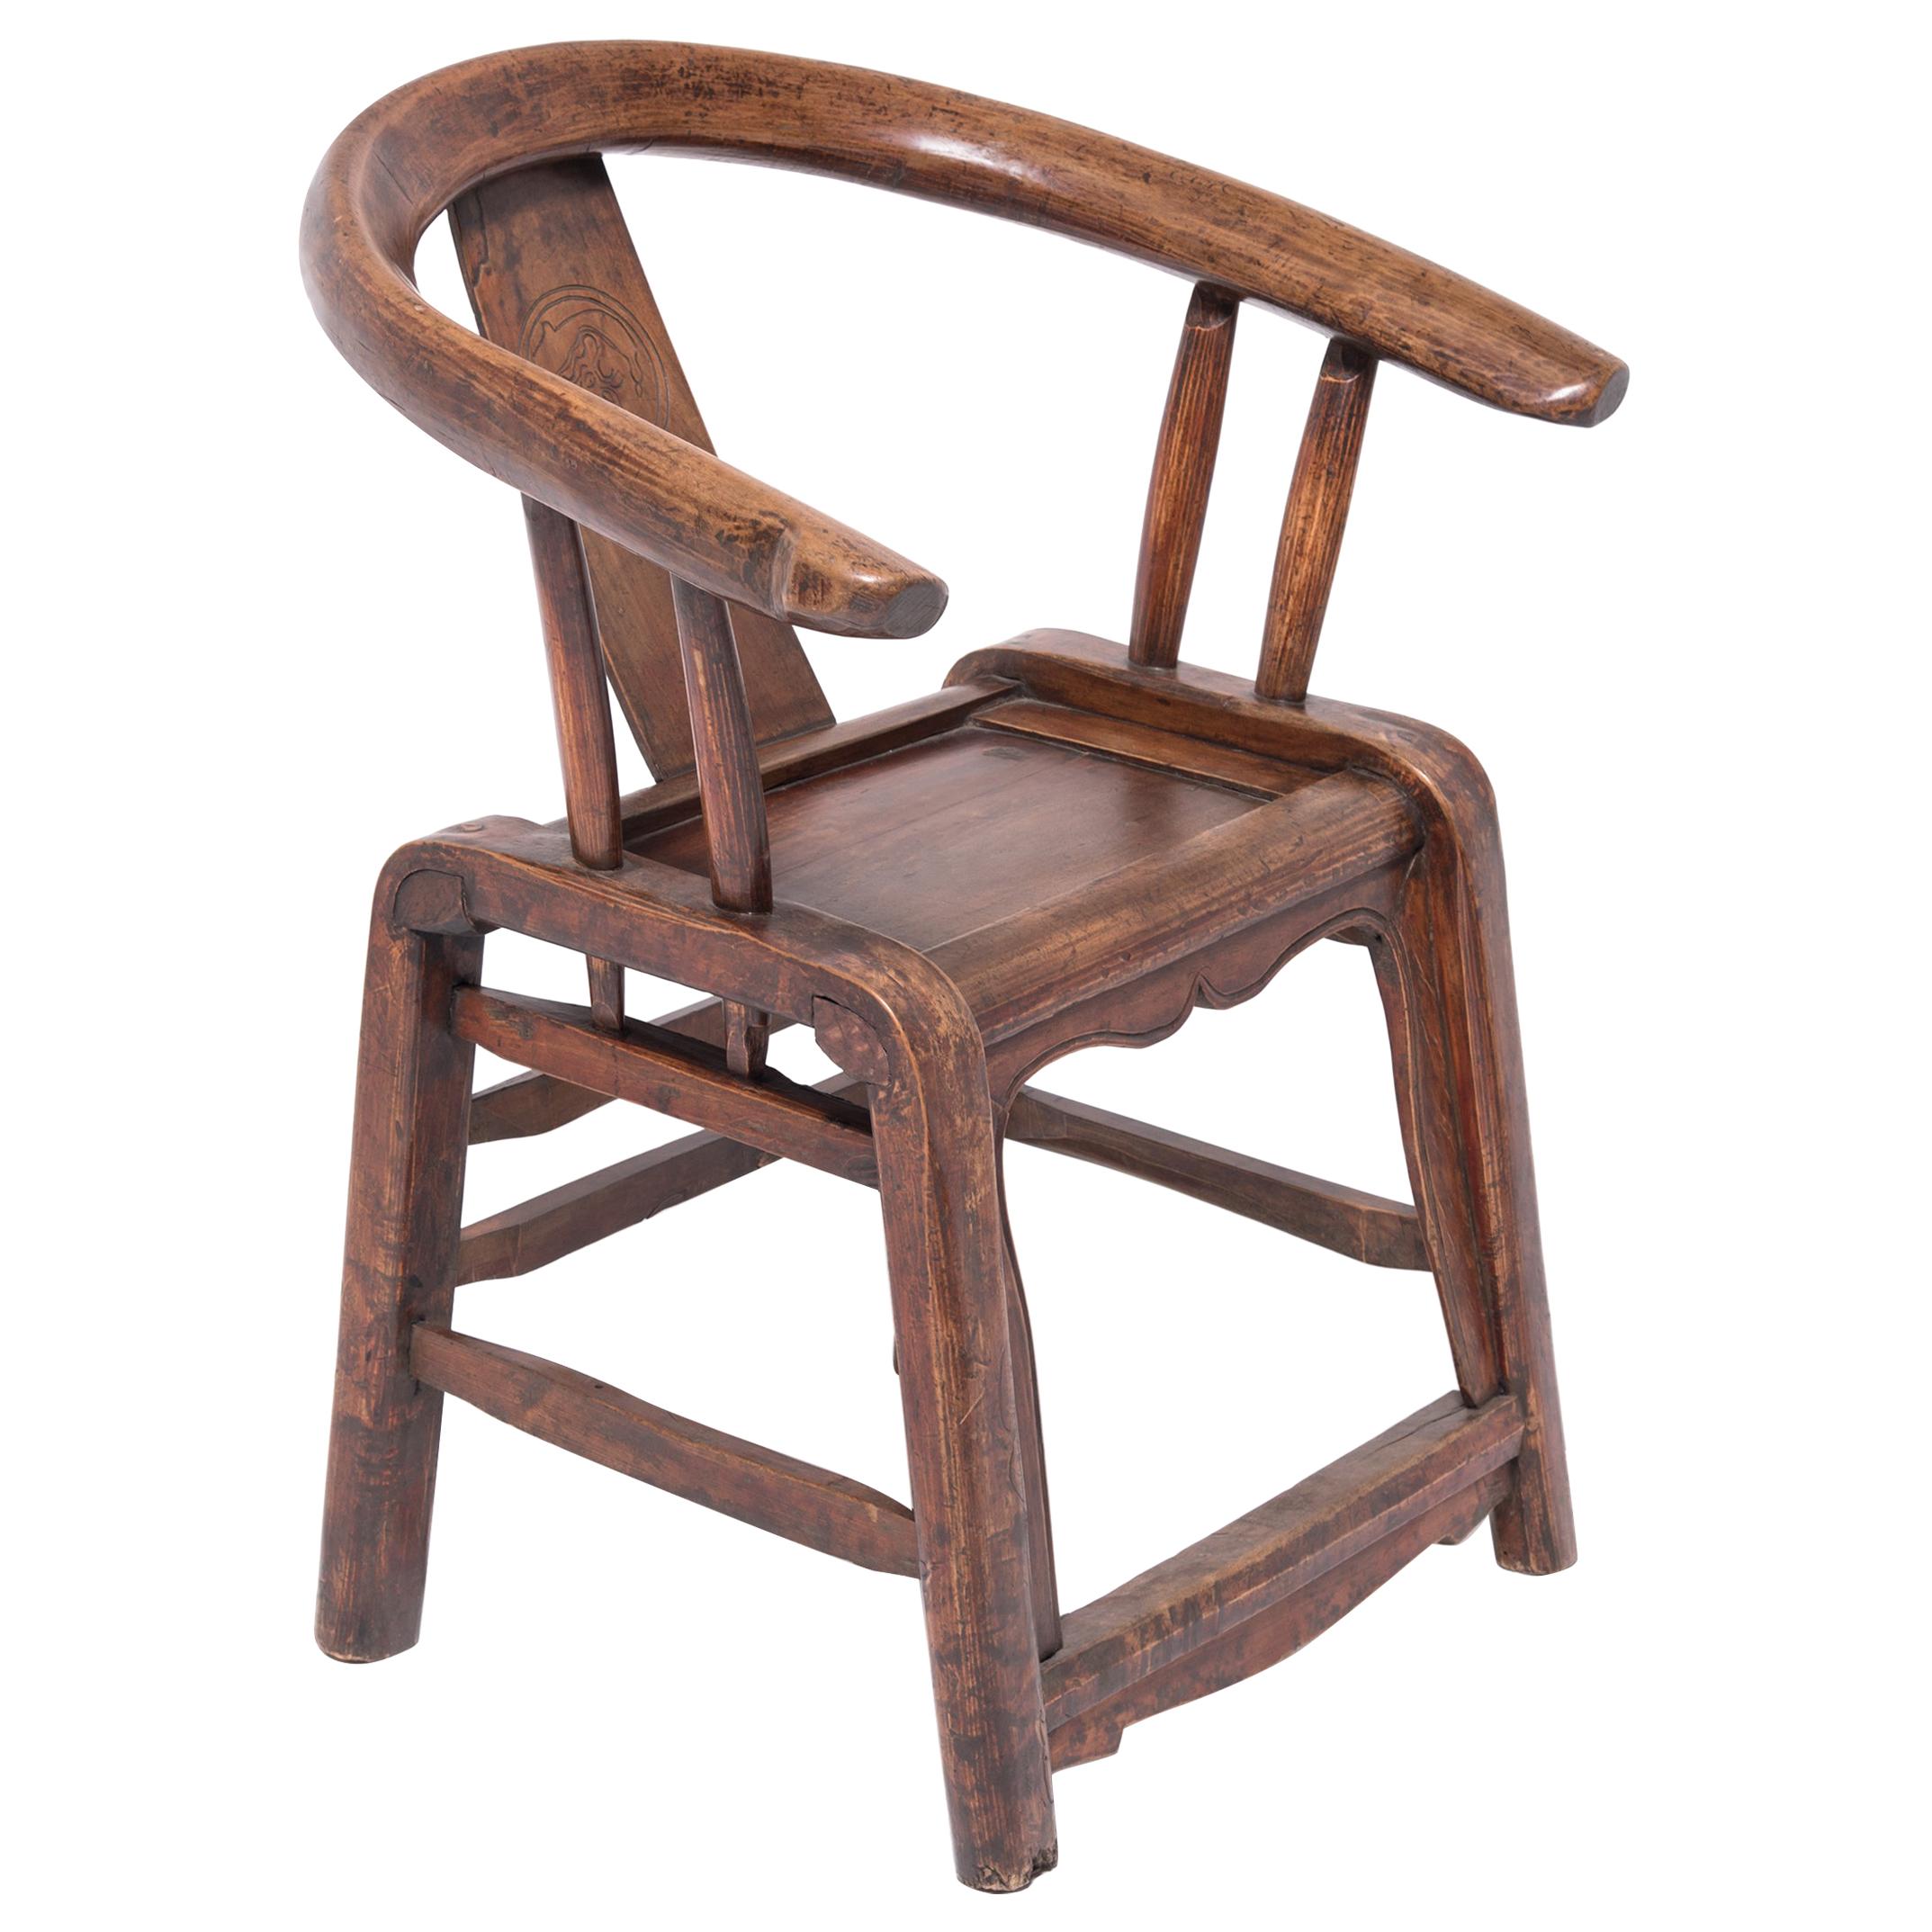 Chinese Provincial Roundback Chair, circa 1850